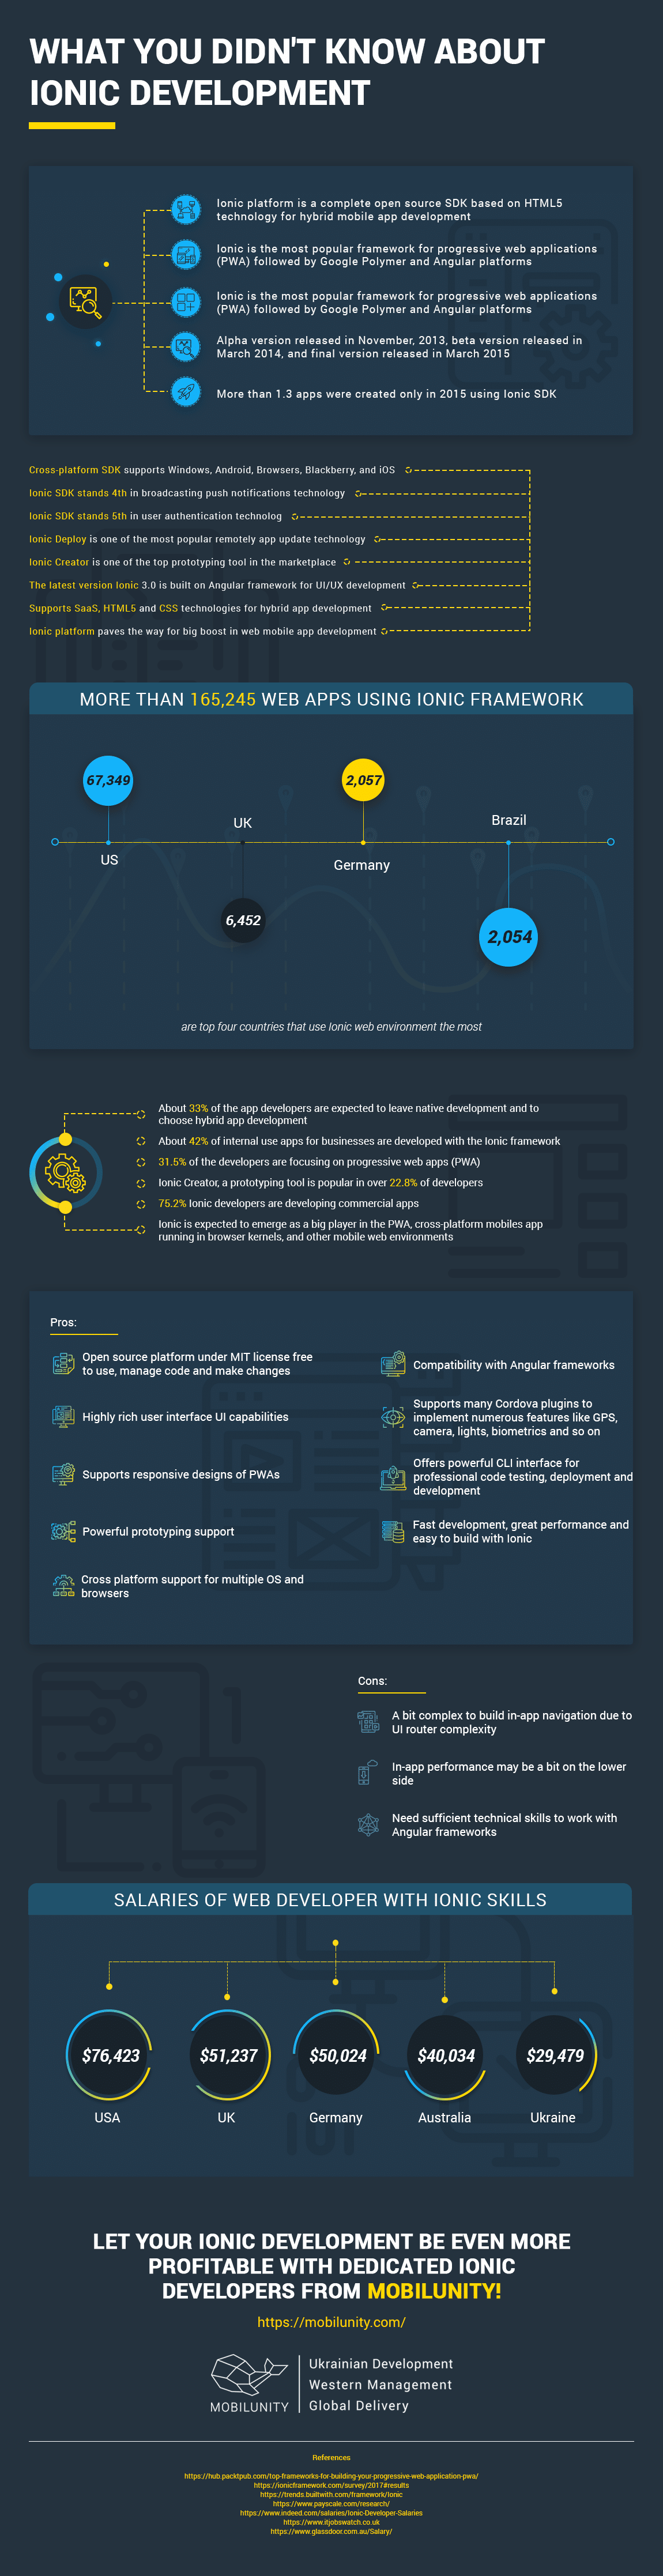 iOnic Development Infographic Article Image